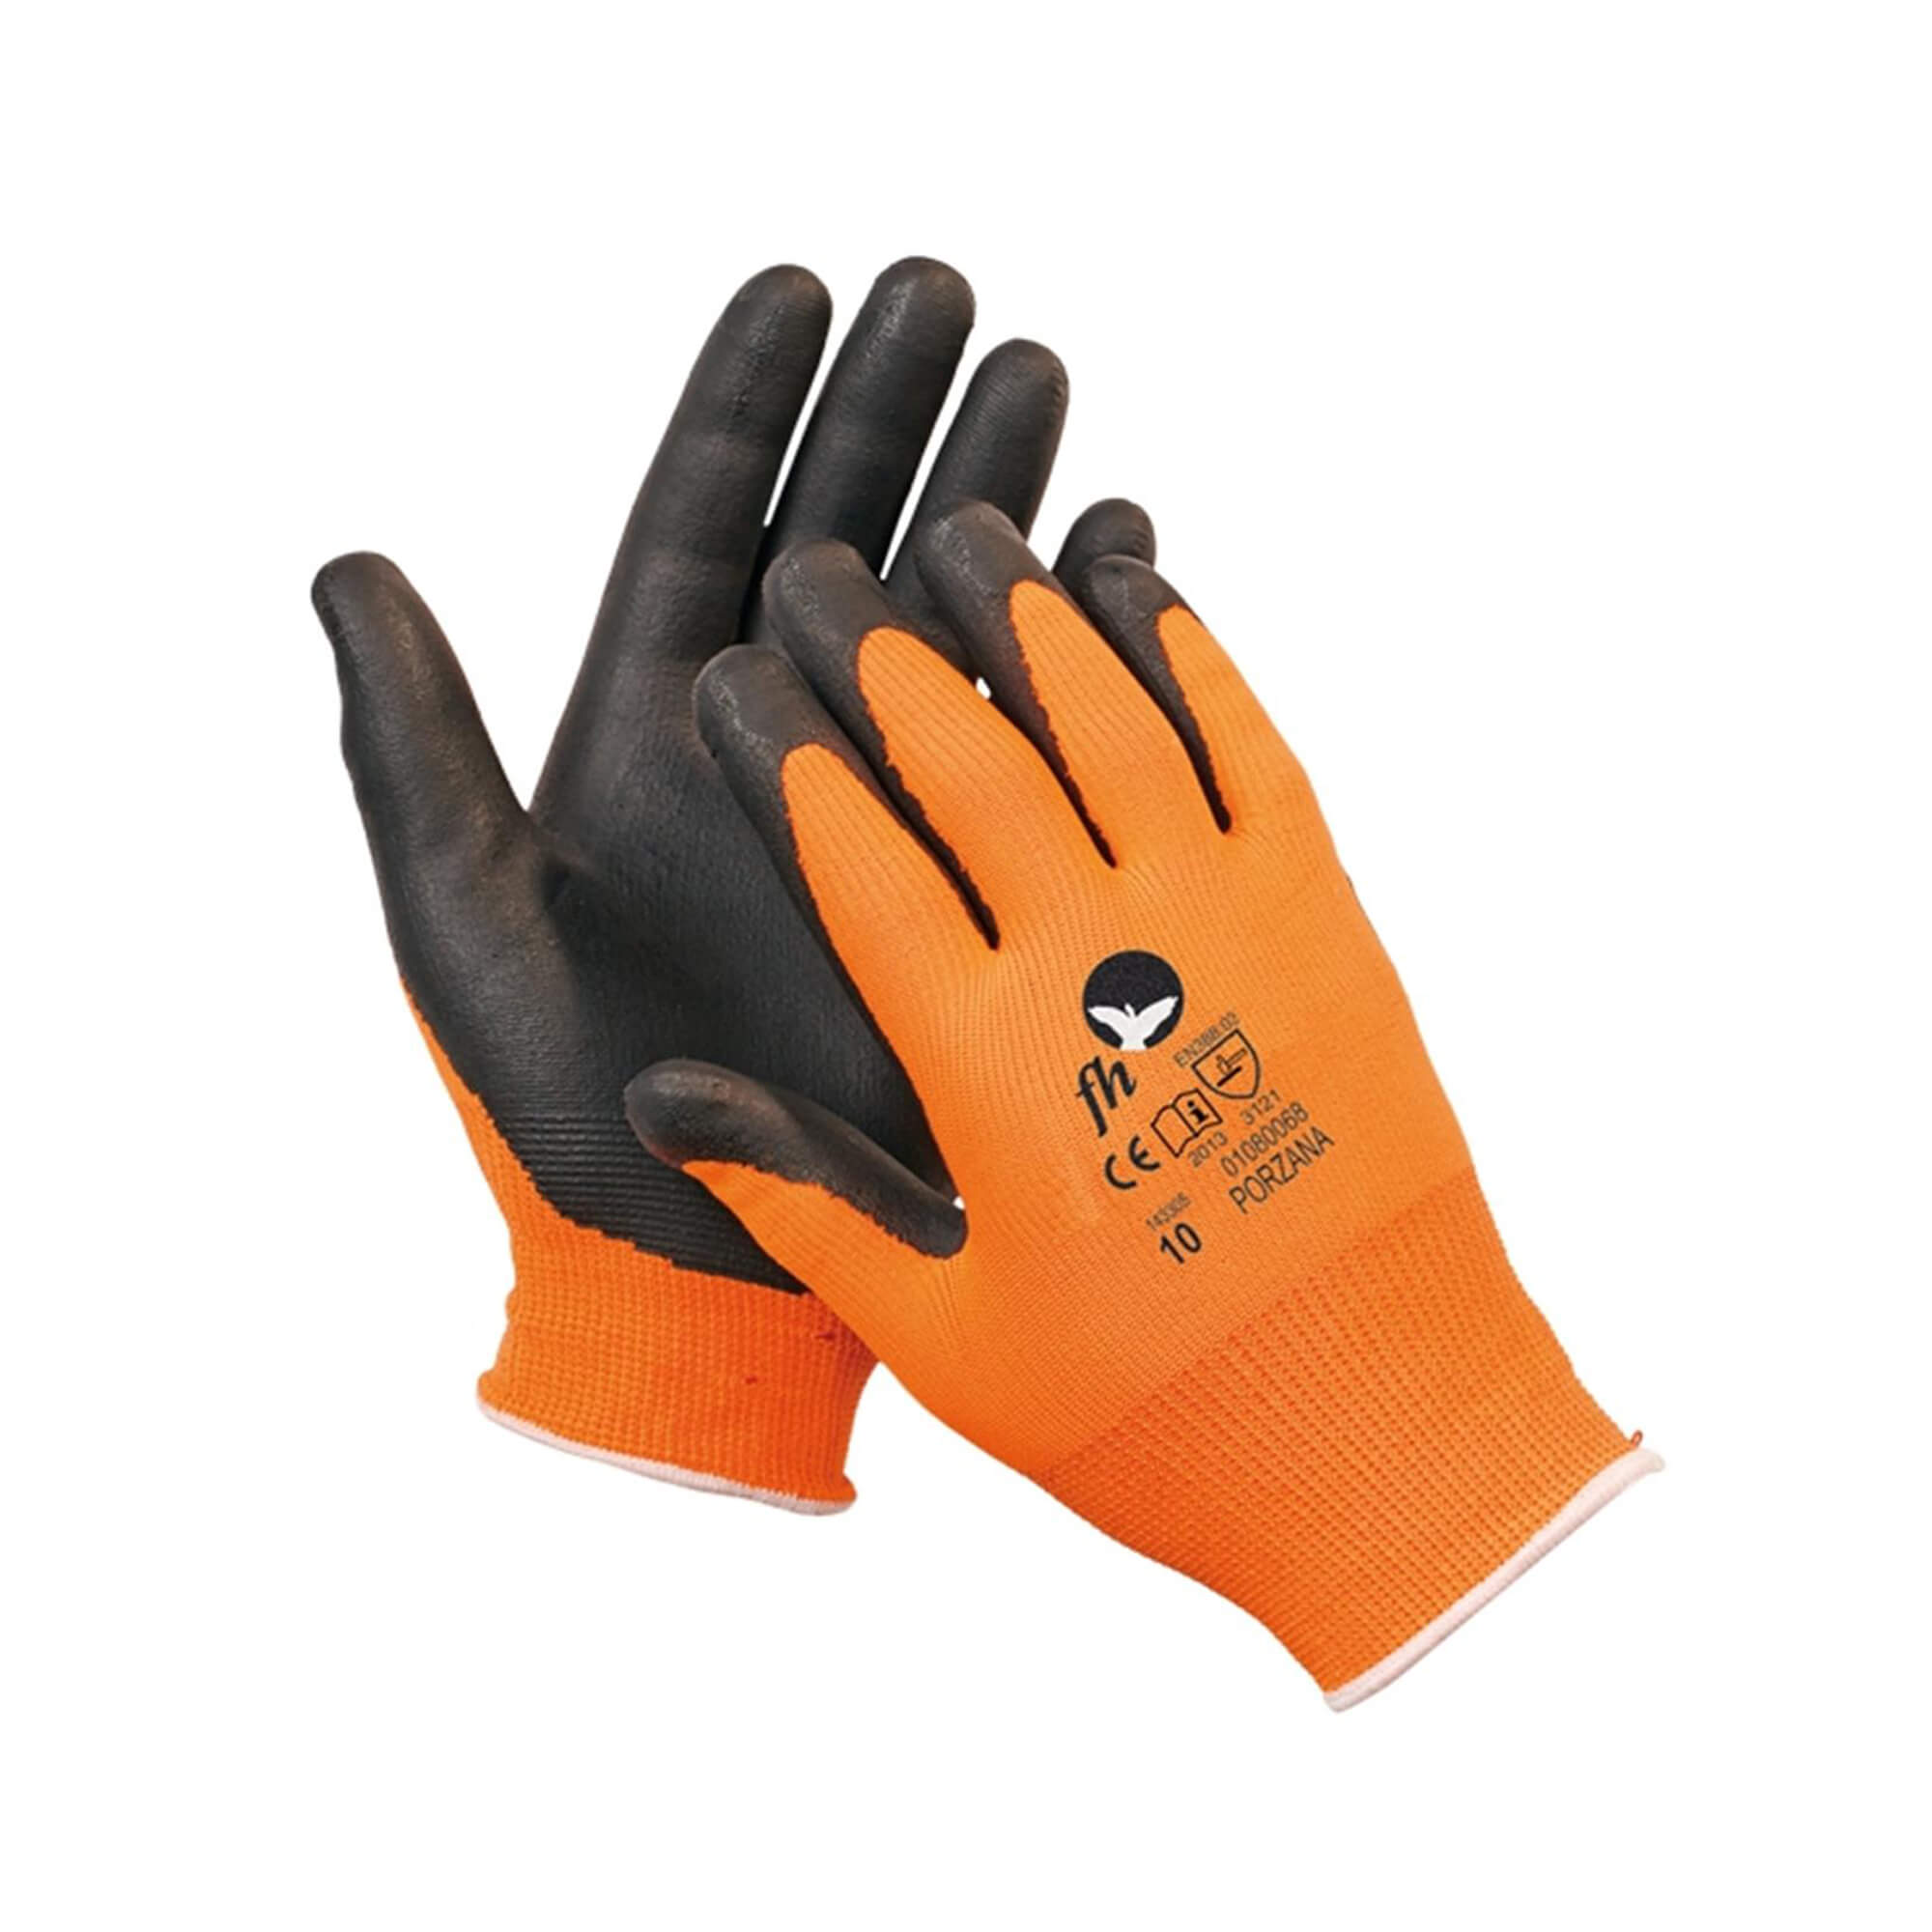 Protective work gloves Porzana